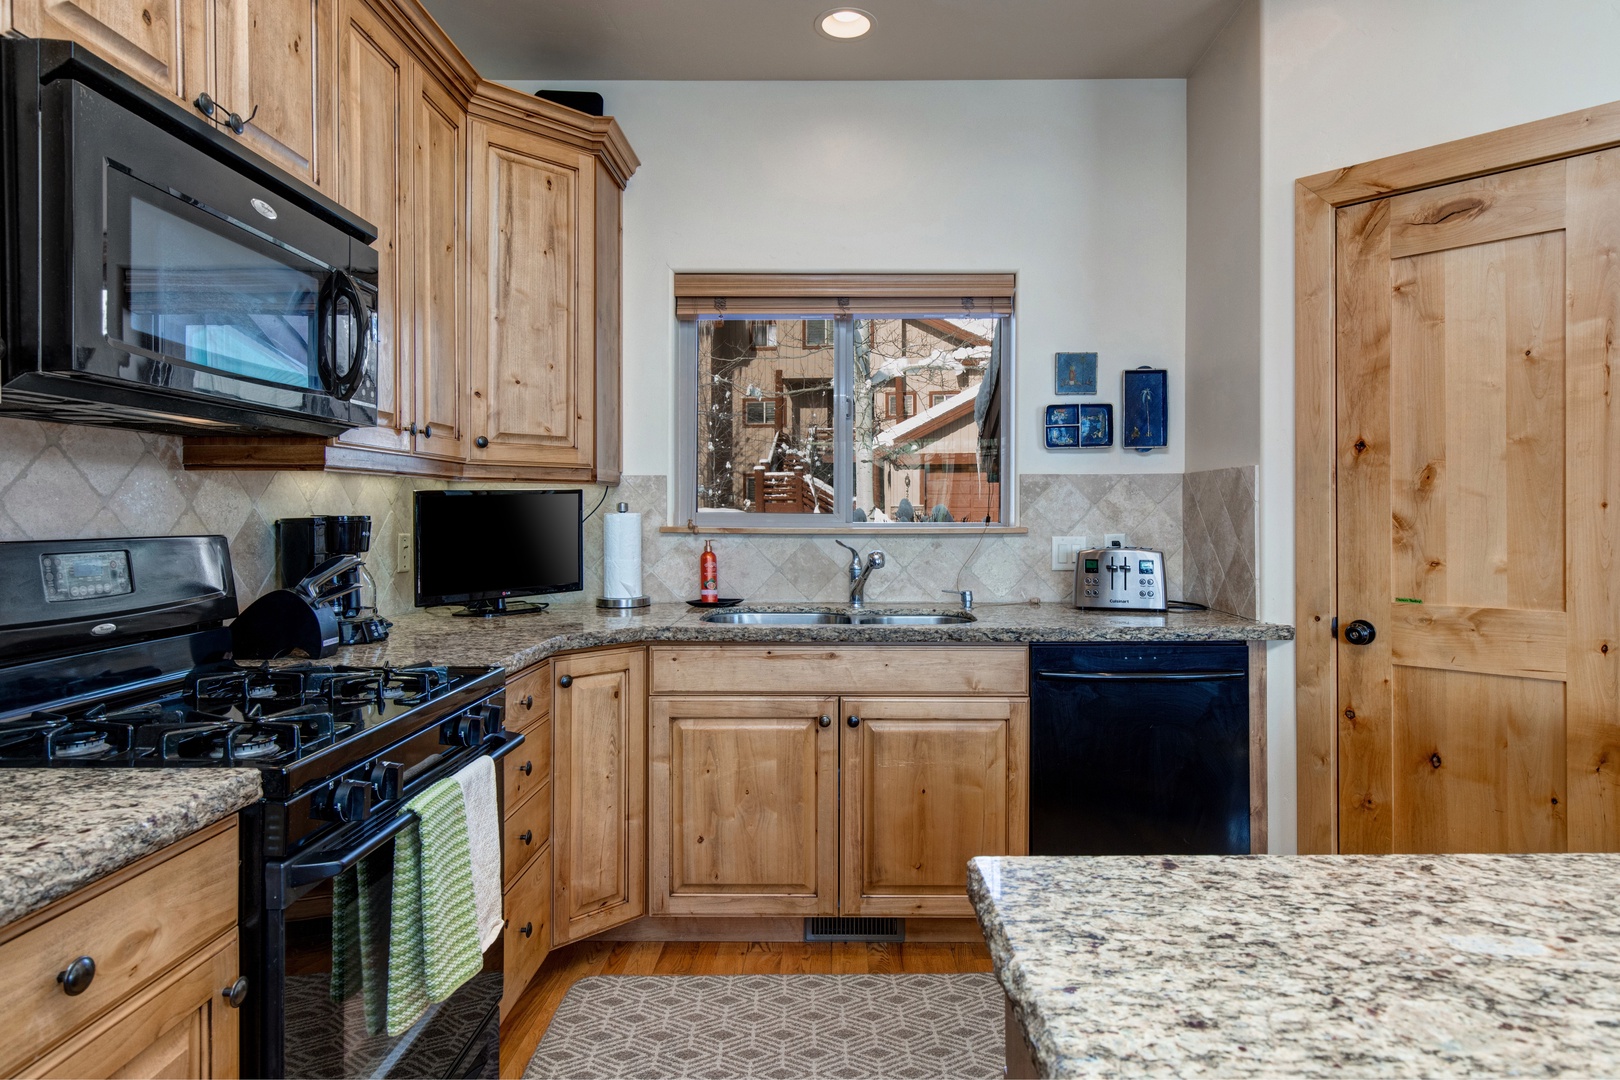 Park City Vacation Rentals, Cedar Ridge Townhouse - Fully stoked kitchen